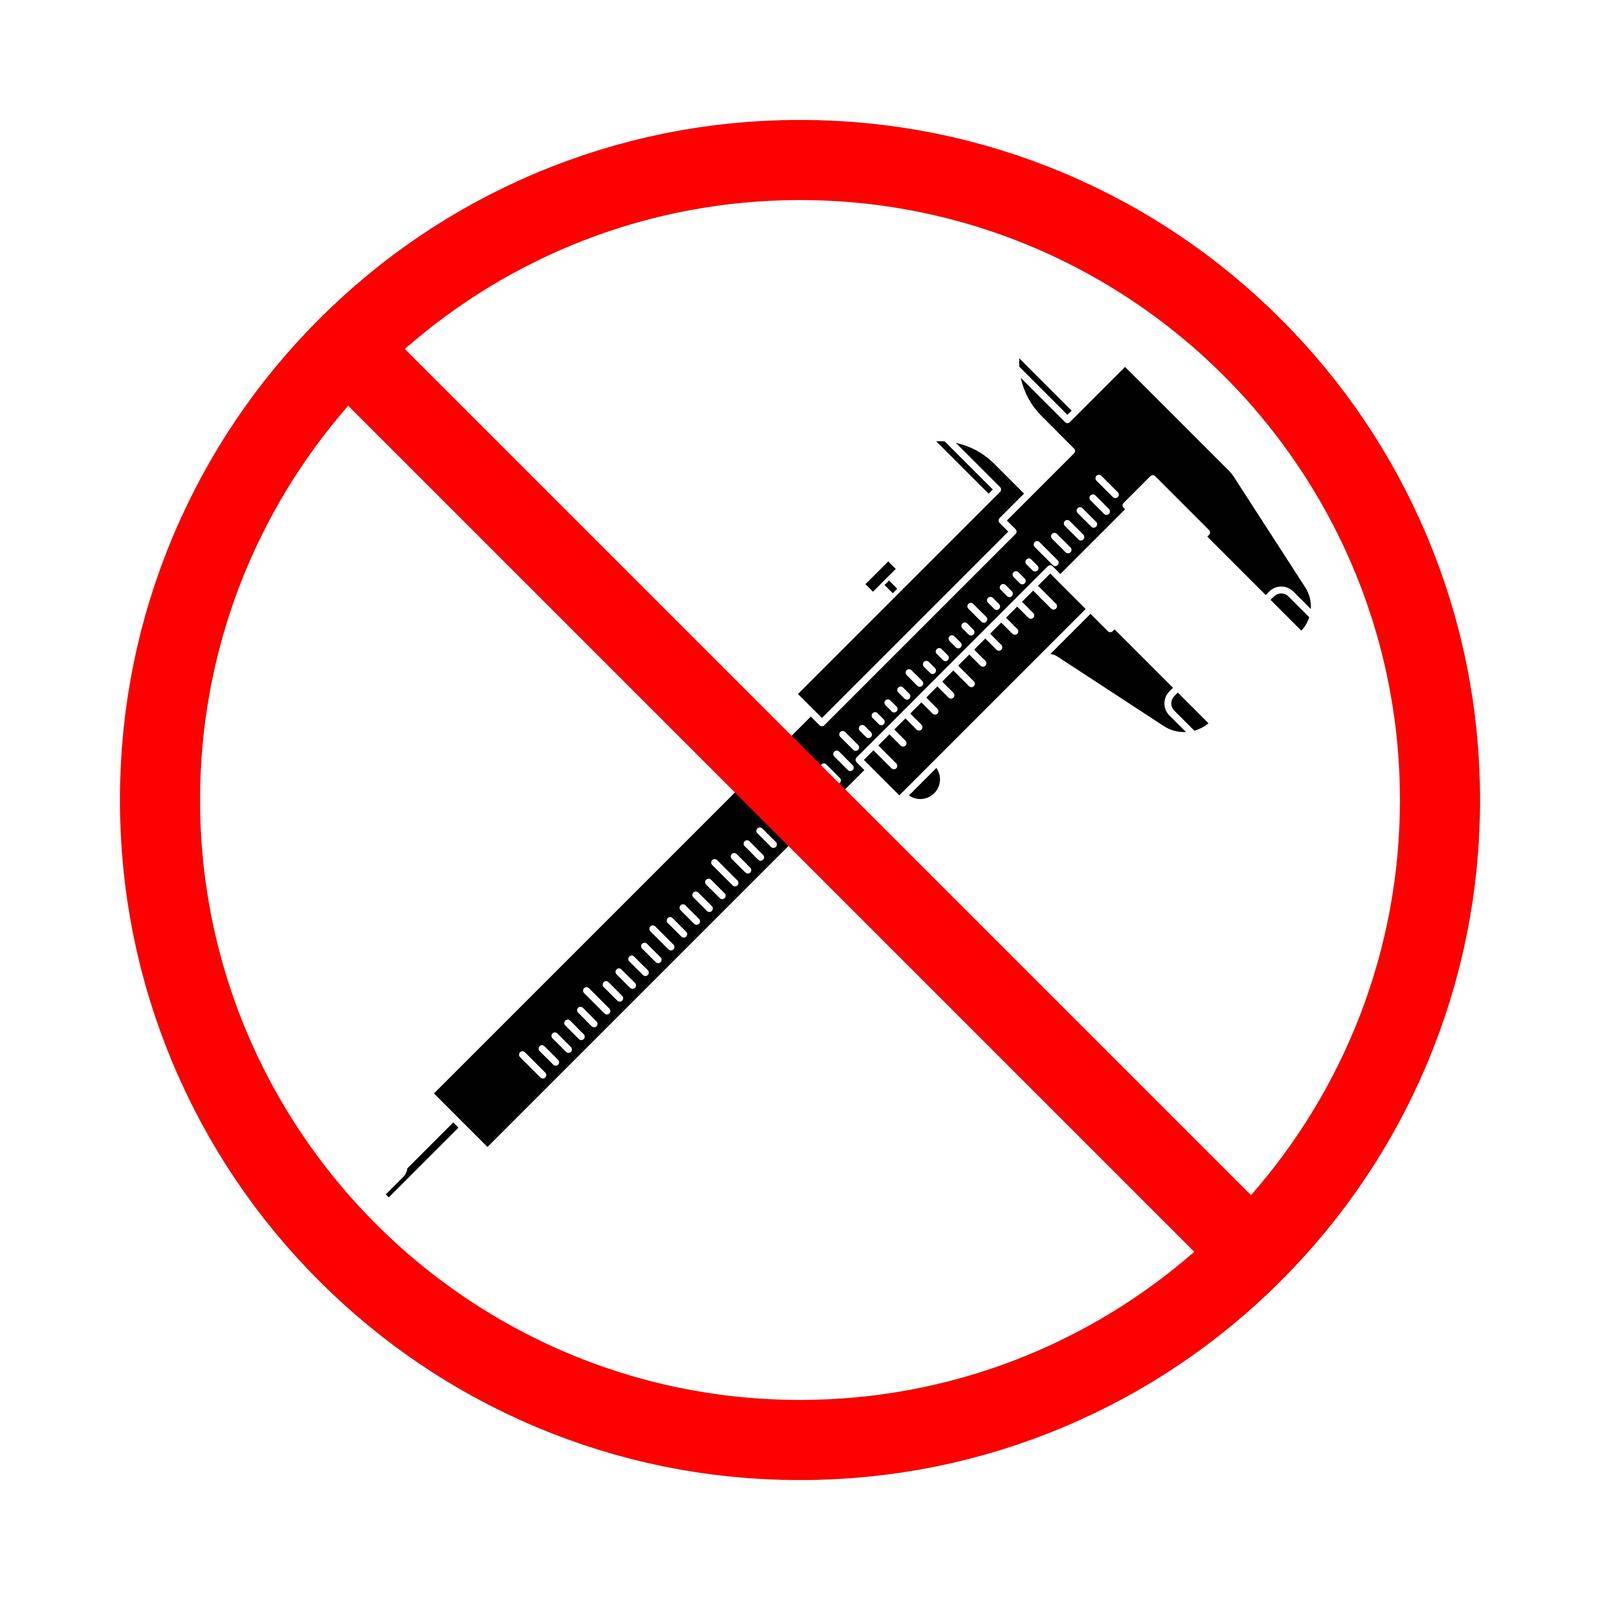 Caliper ban sign. Caliper is forbidden. Prohibited sign of caliper. Red prohibition sign. Vector illustration